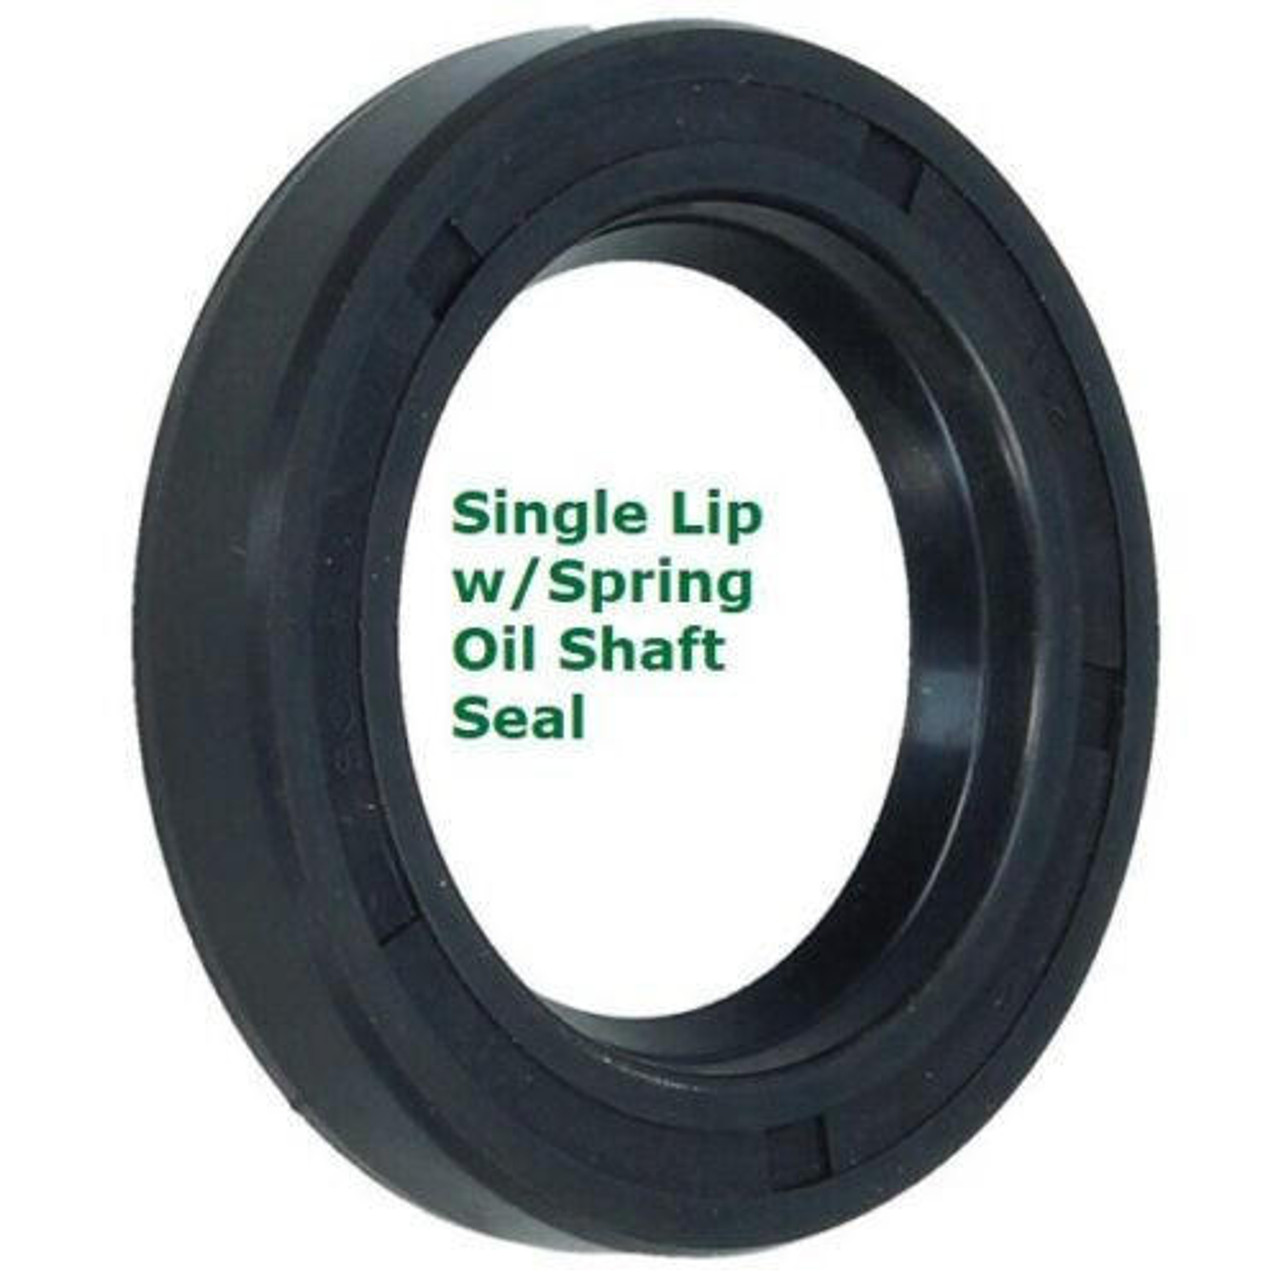 Metric Oil Shaft Seal 160 x 200 x 14mm Single Lip  Price for 1 pc